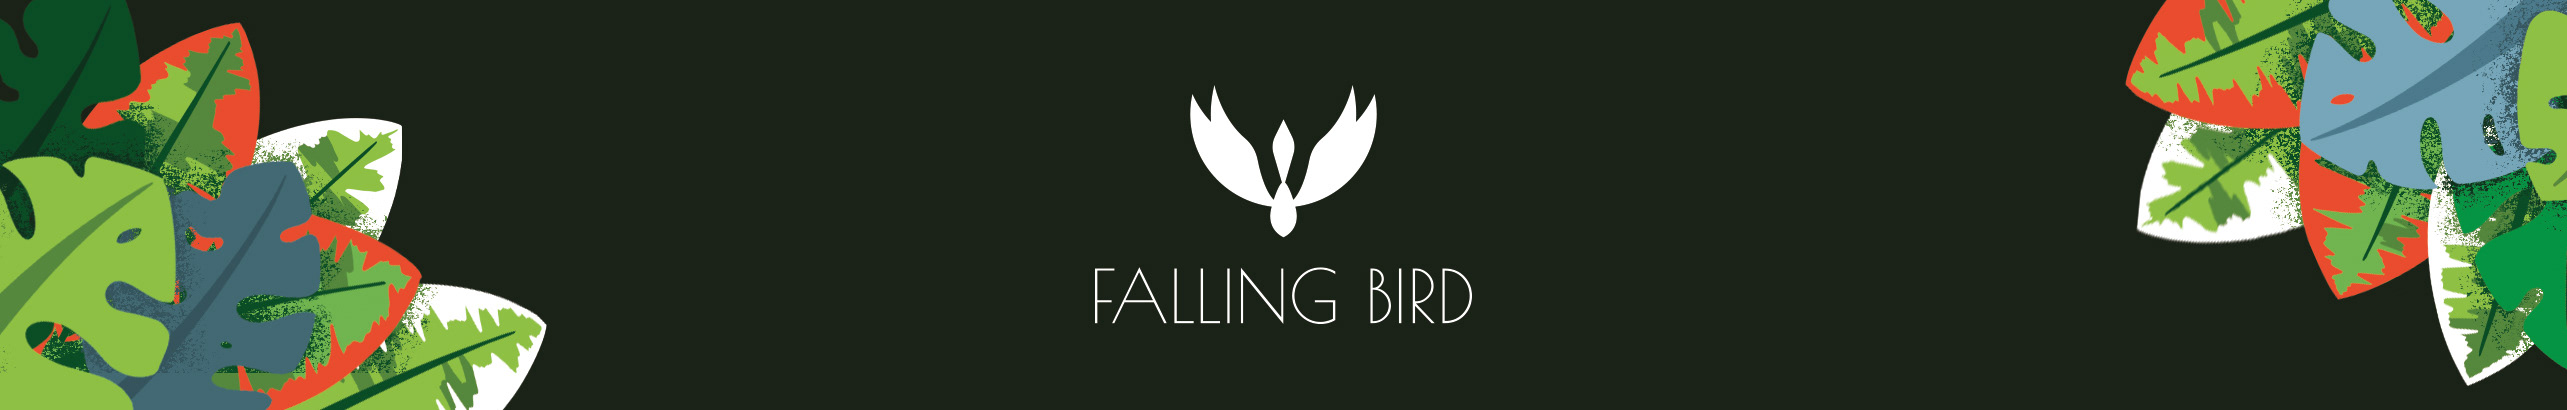 Falling Bird's profile banner